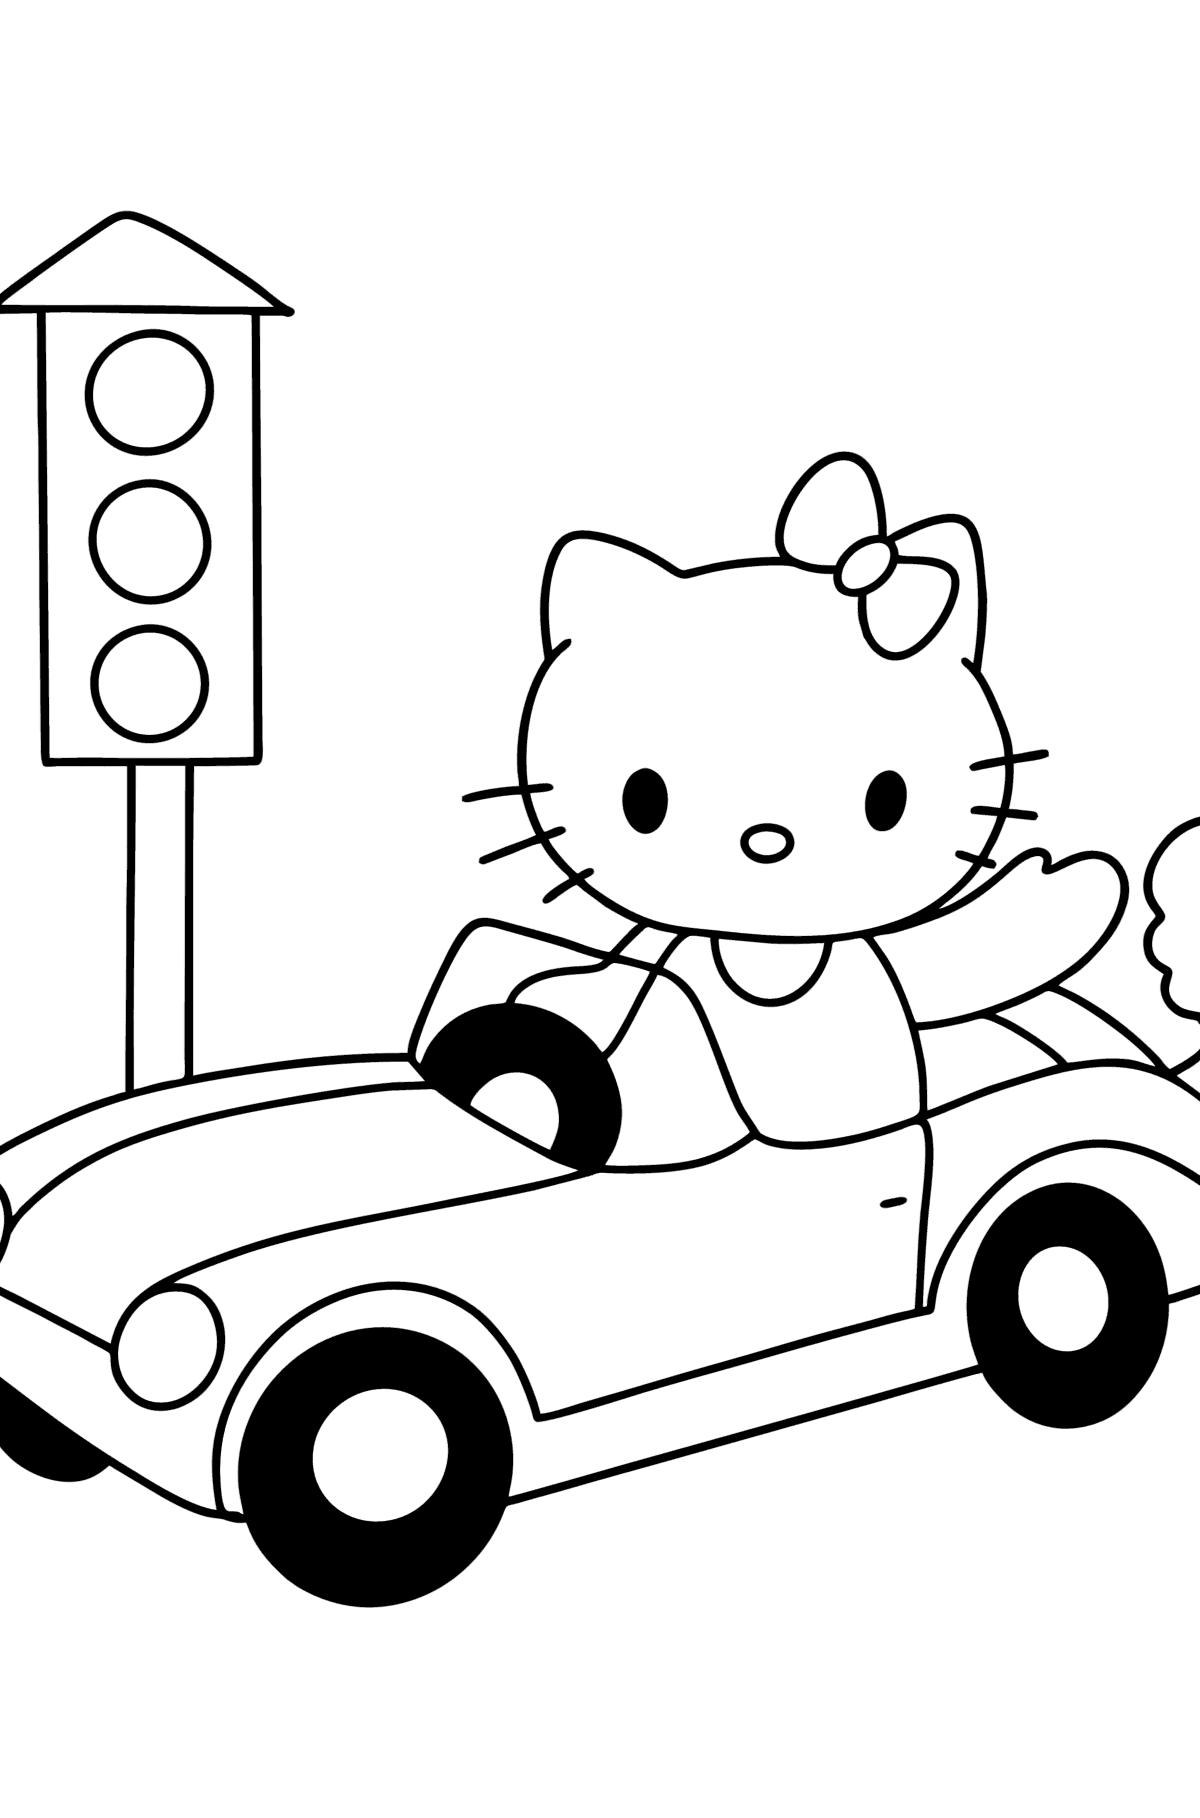 Раскраска Хелло Китти (Hello Kitty) на машине - Картинки для Детей